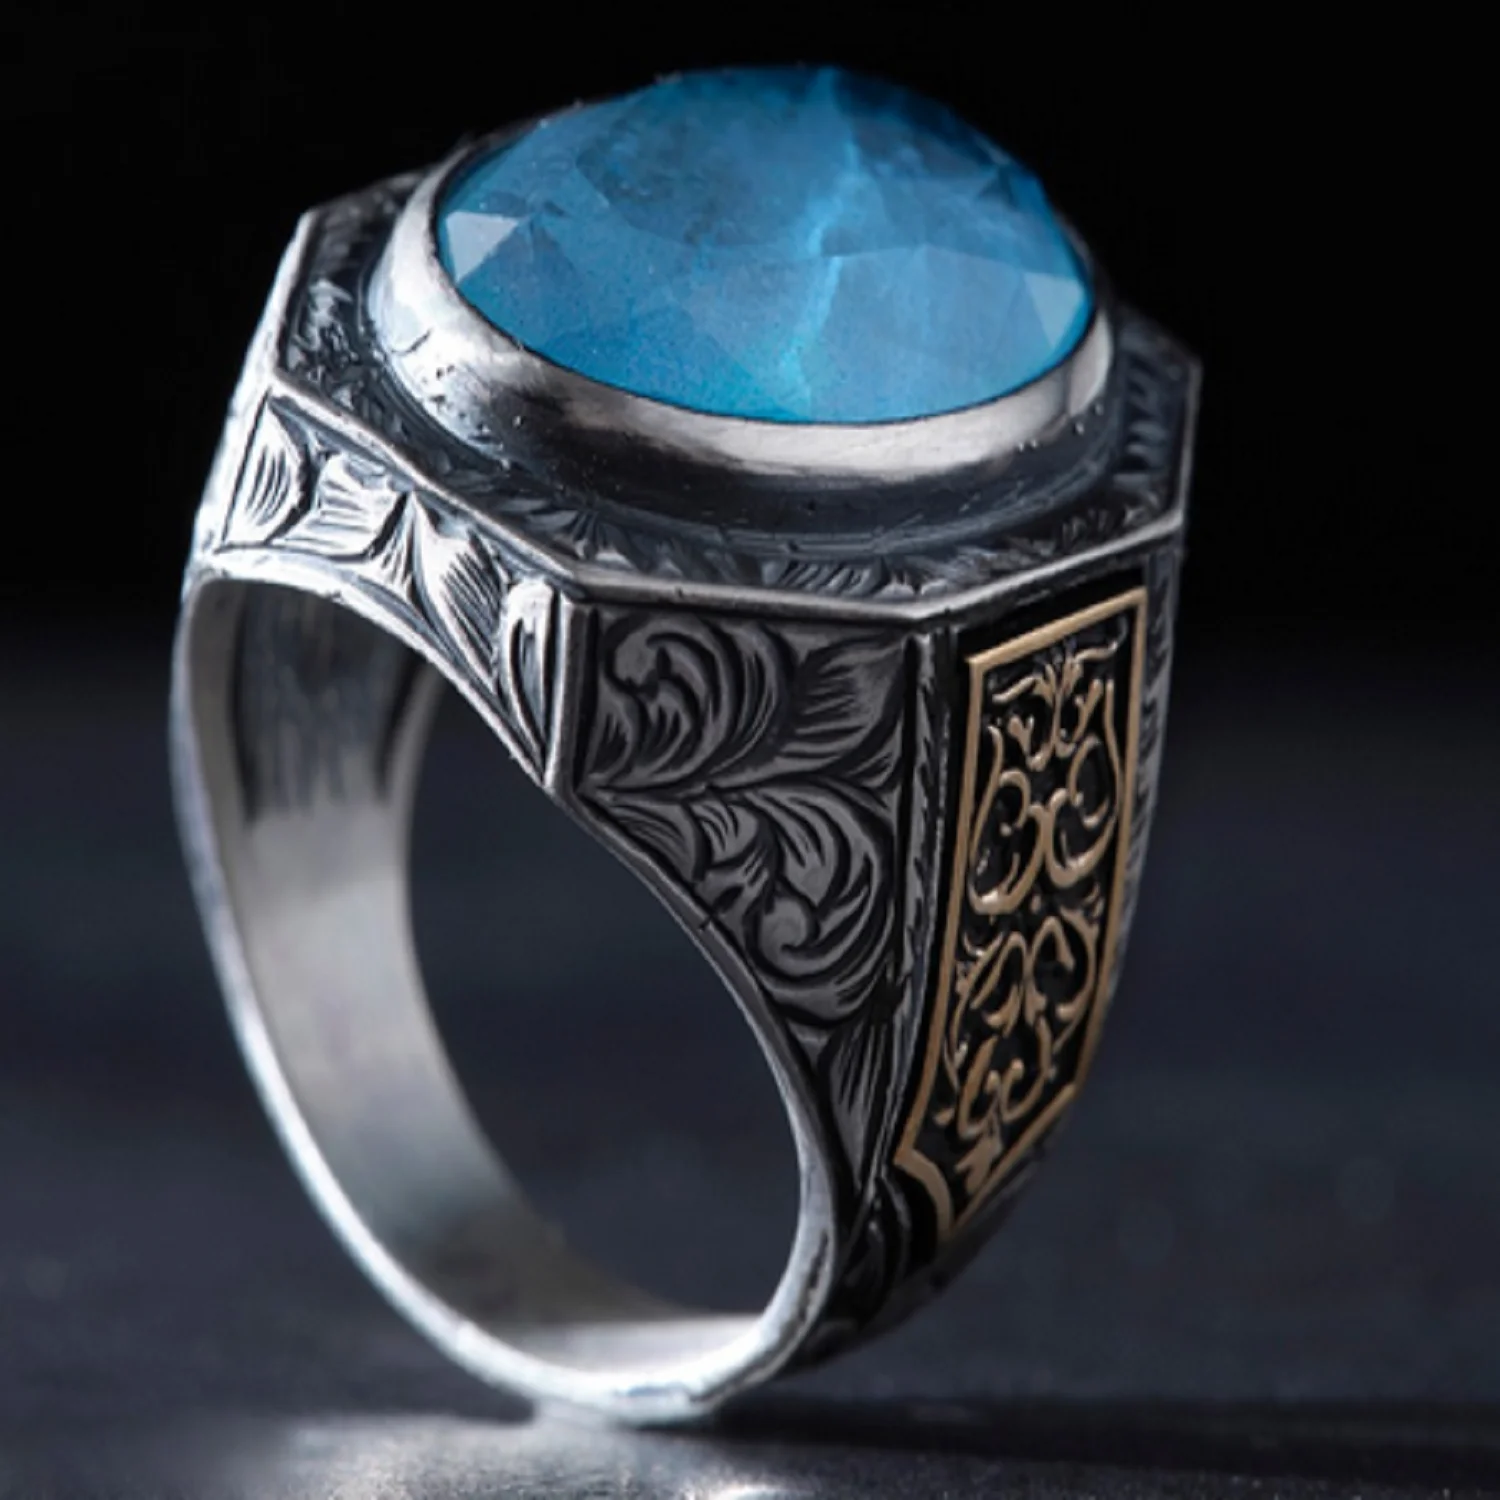 Paraiba Torumaline Stone Unisex Men's Women's Ring with Natural Stone Adjustable Handmade Jewelry Turkish Class Noble Jewellery